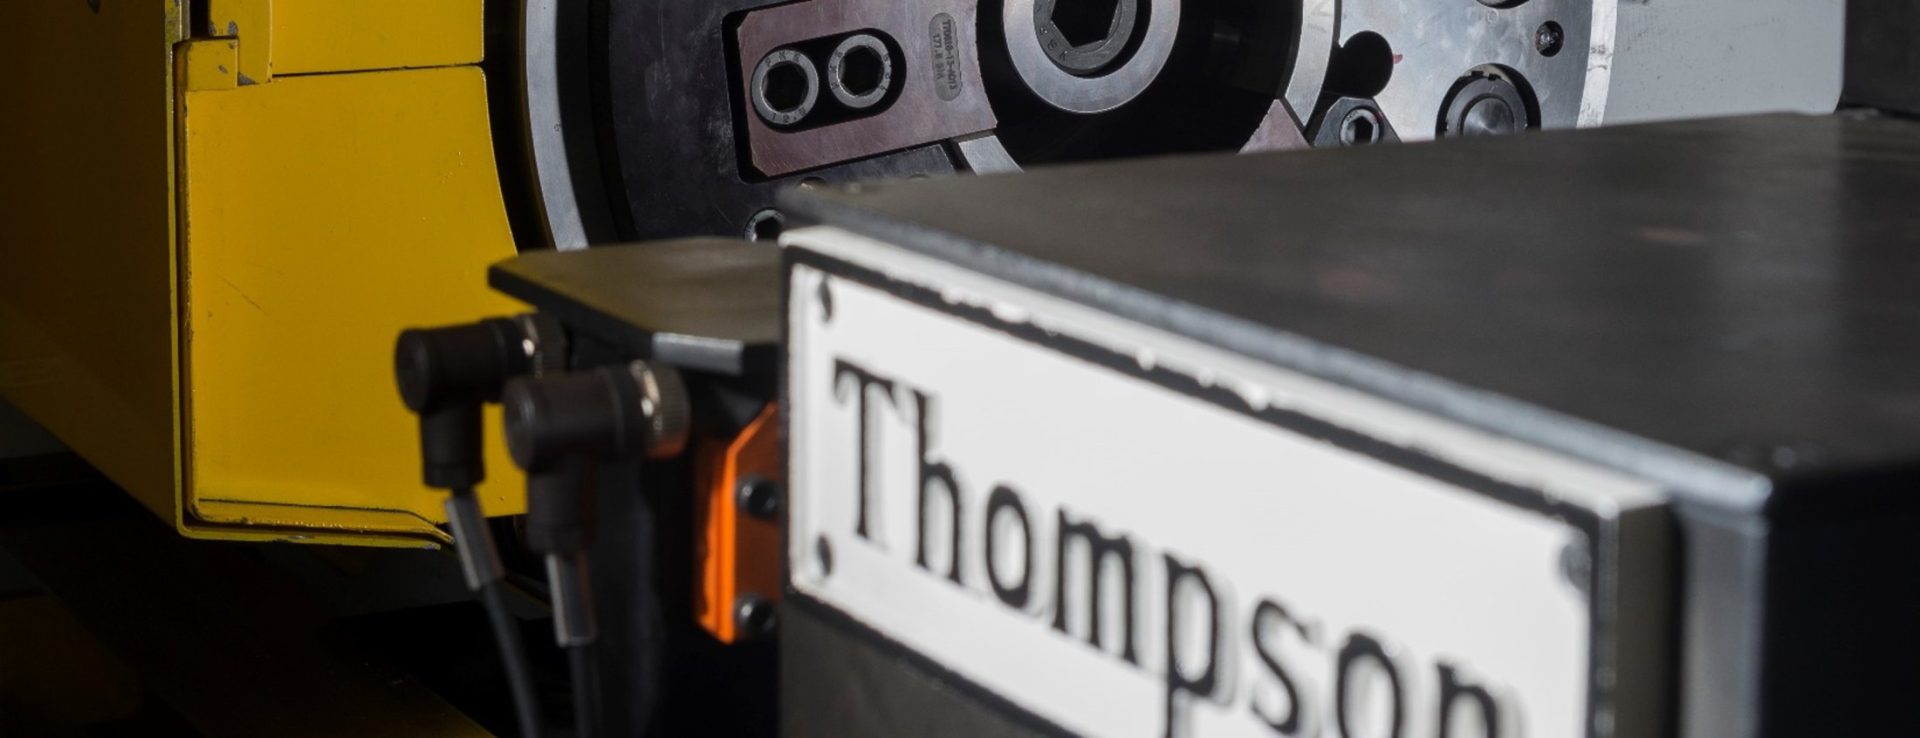 Thompson name plate